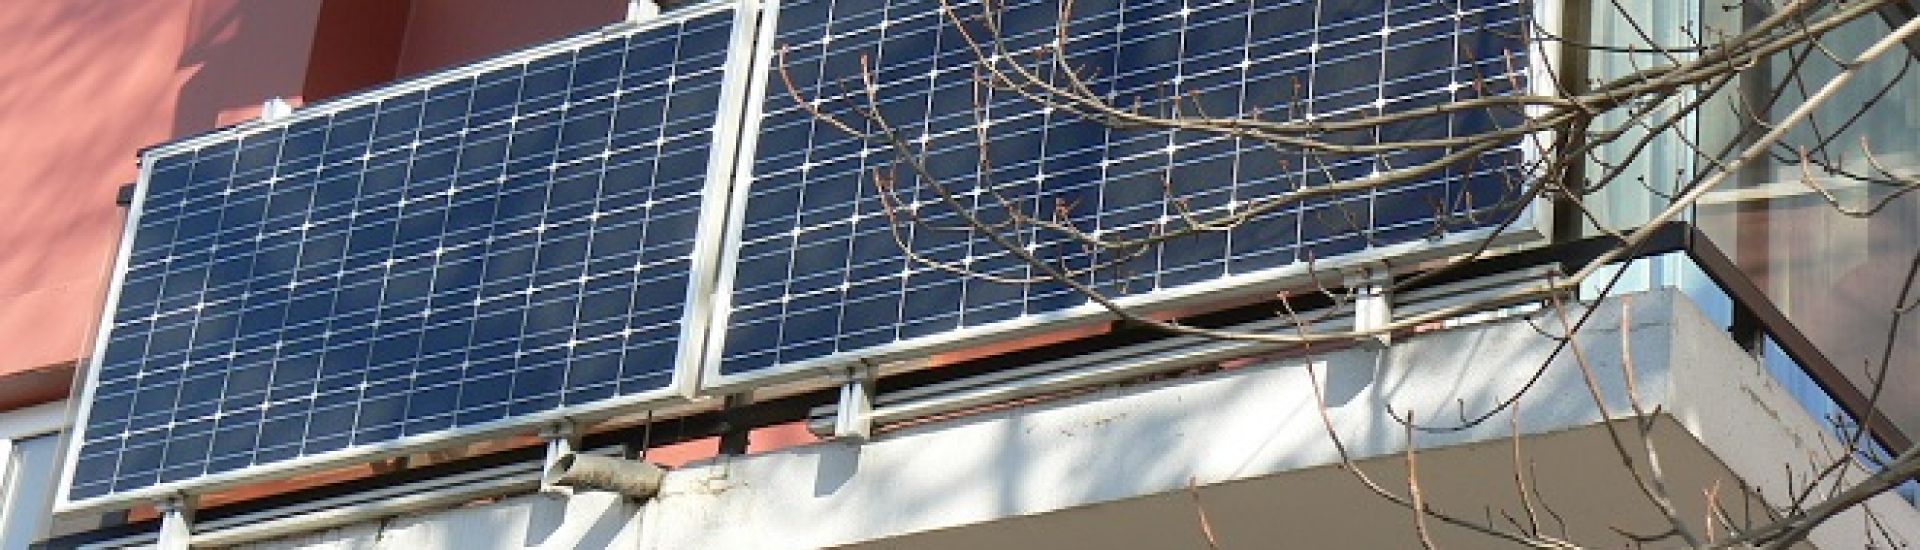 Balkon-Photovoltaik-Modul